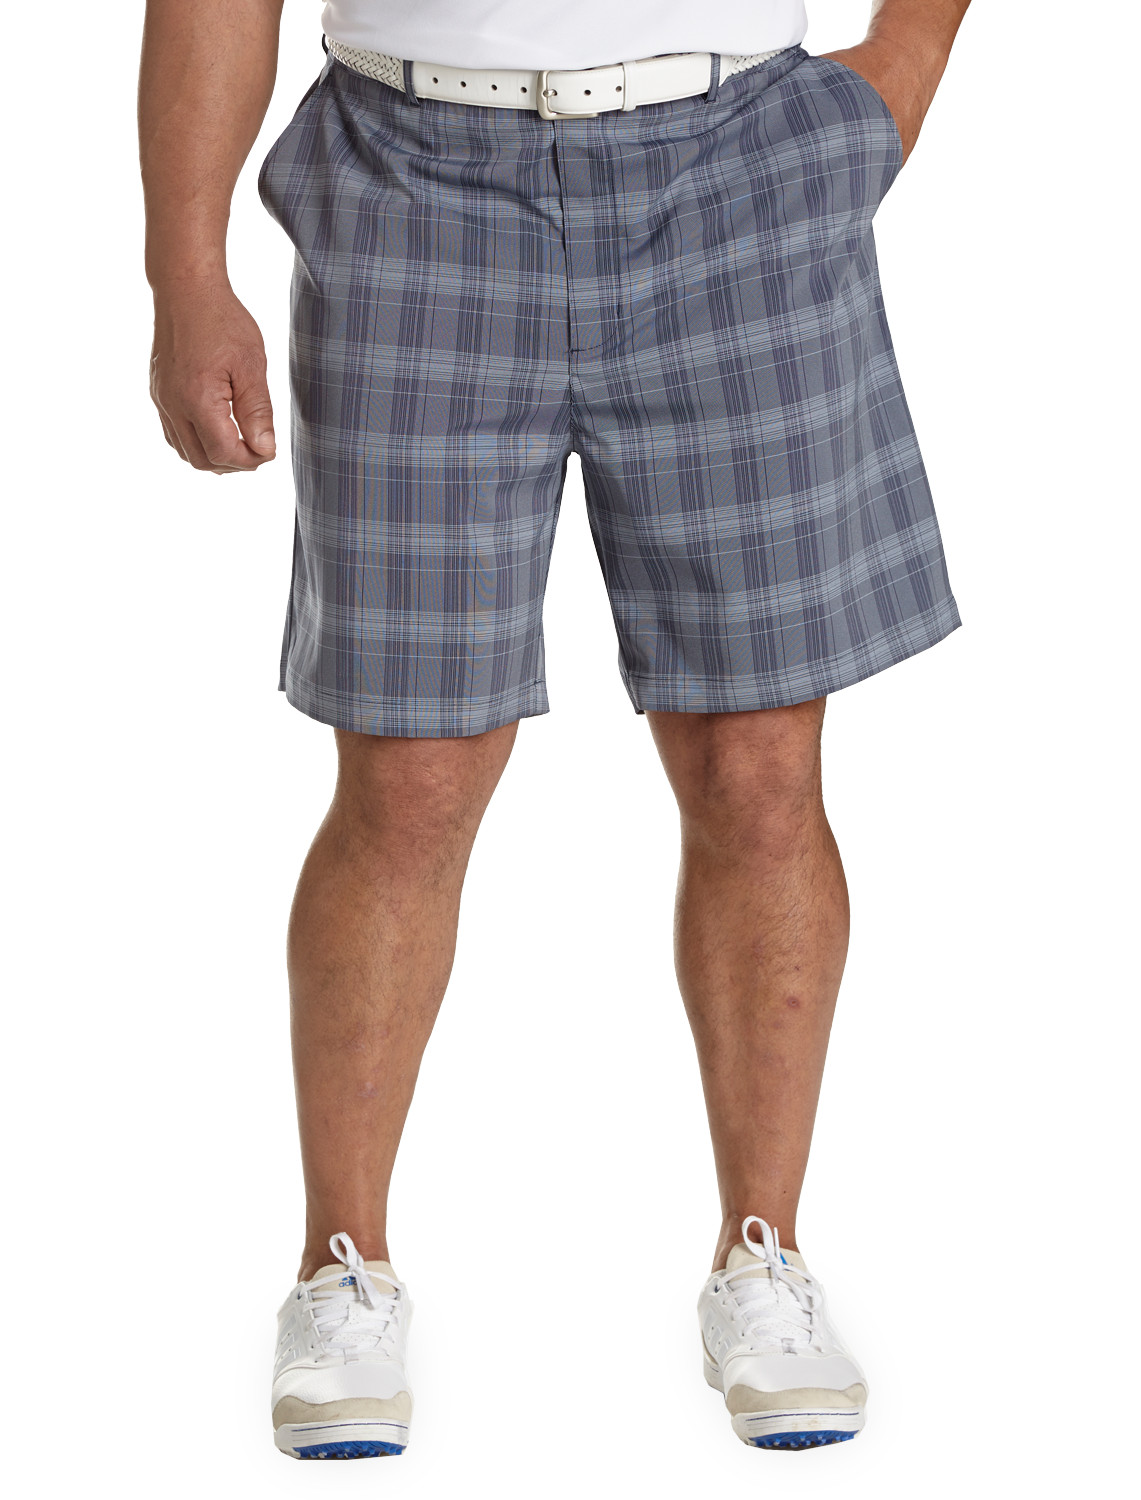 Reebok PlayDry Plaid Golf Shorts Casual Male XL Big & Tall | eBay